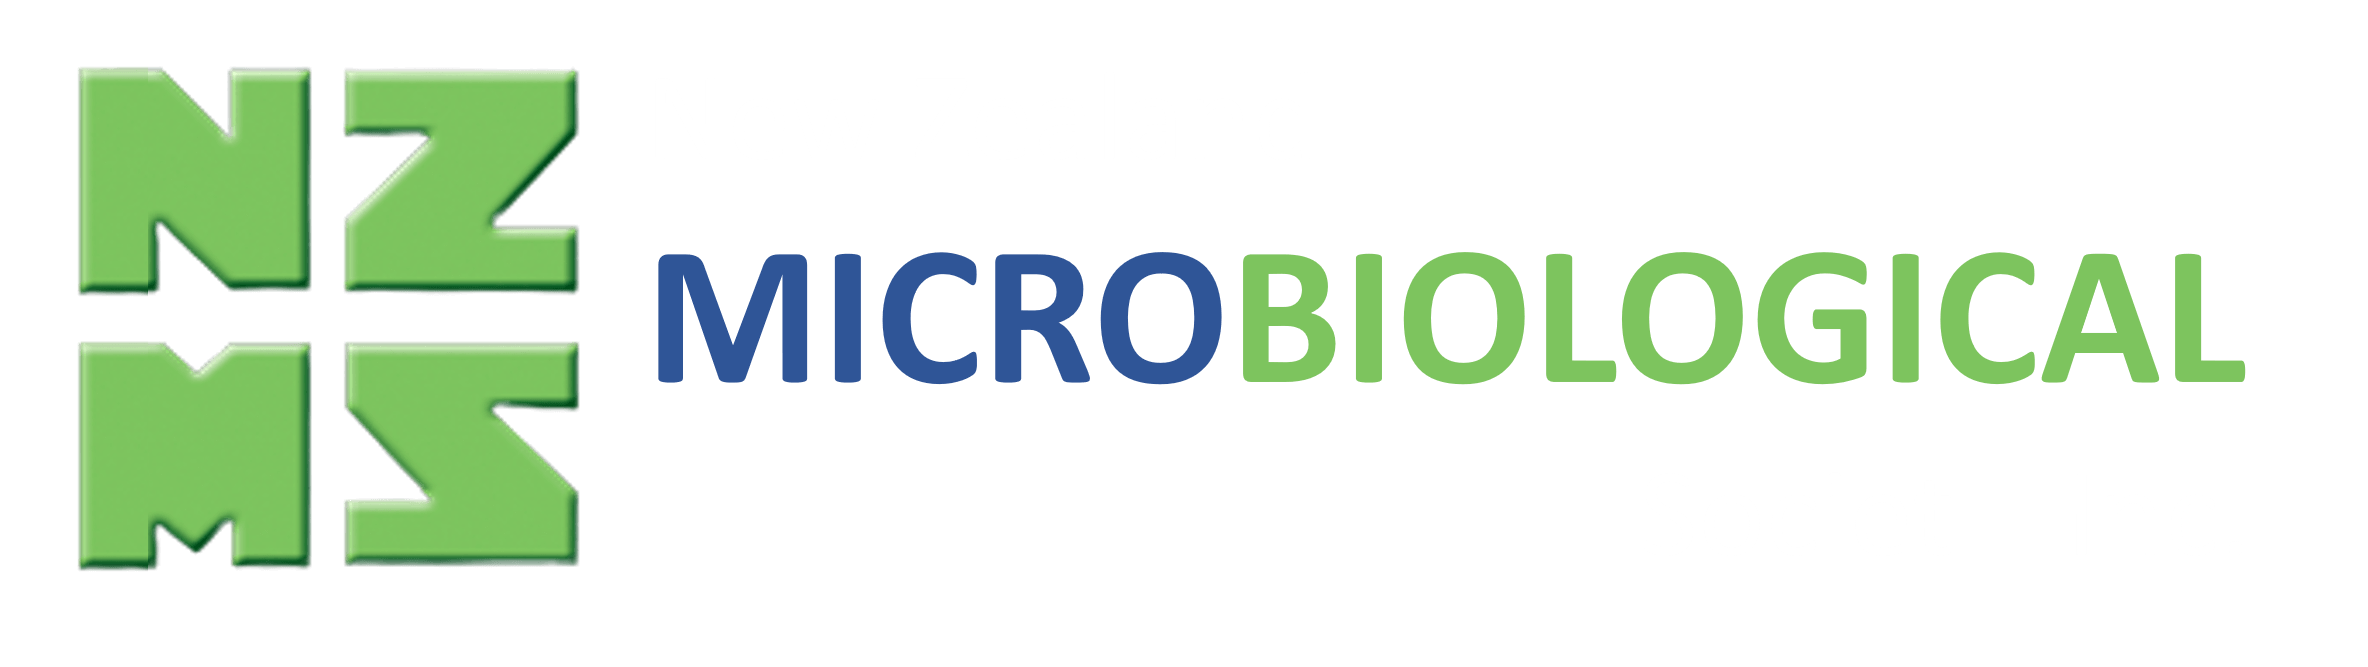 New Zealand Microbiological Society logo